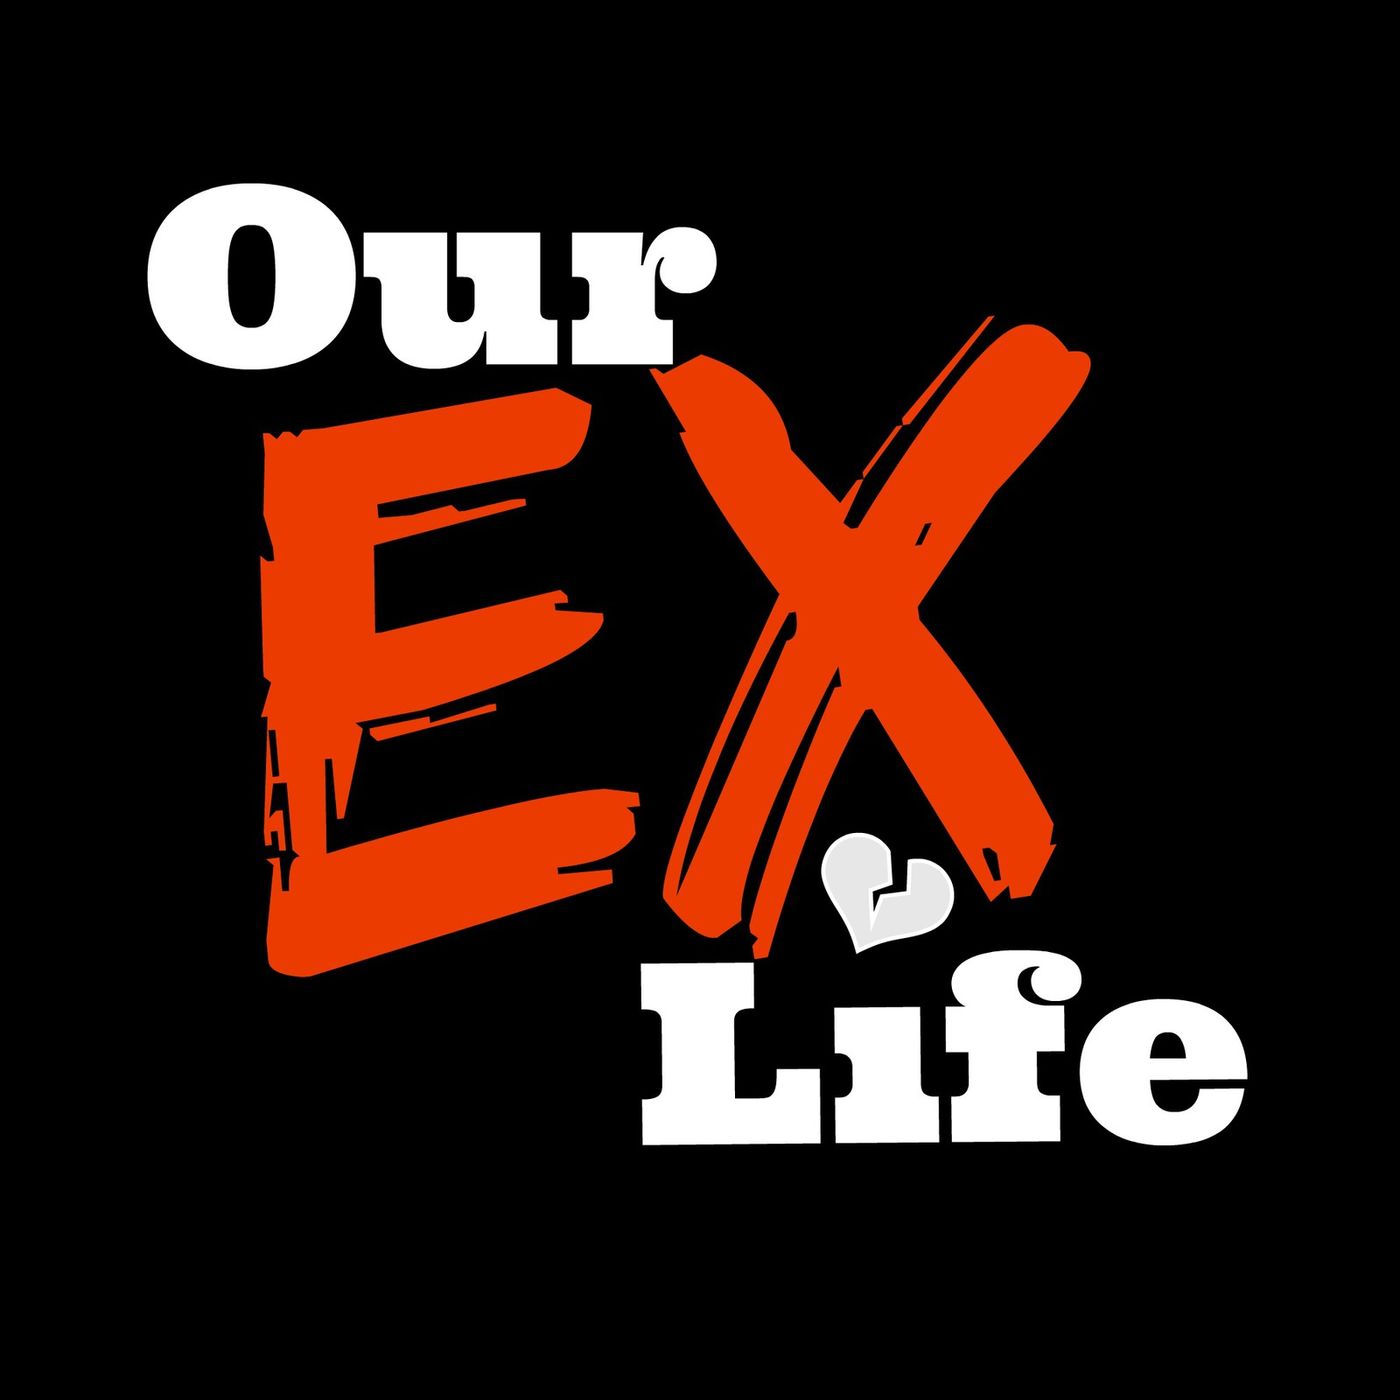 Live is Life(ex/ex+). Life is ex